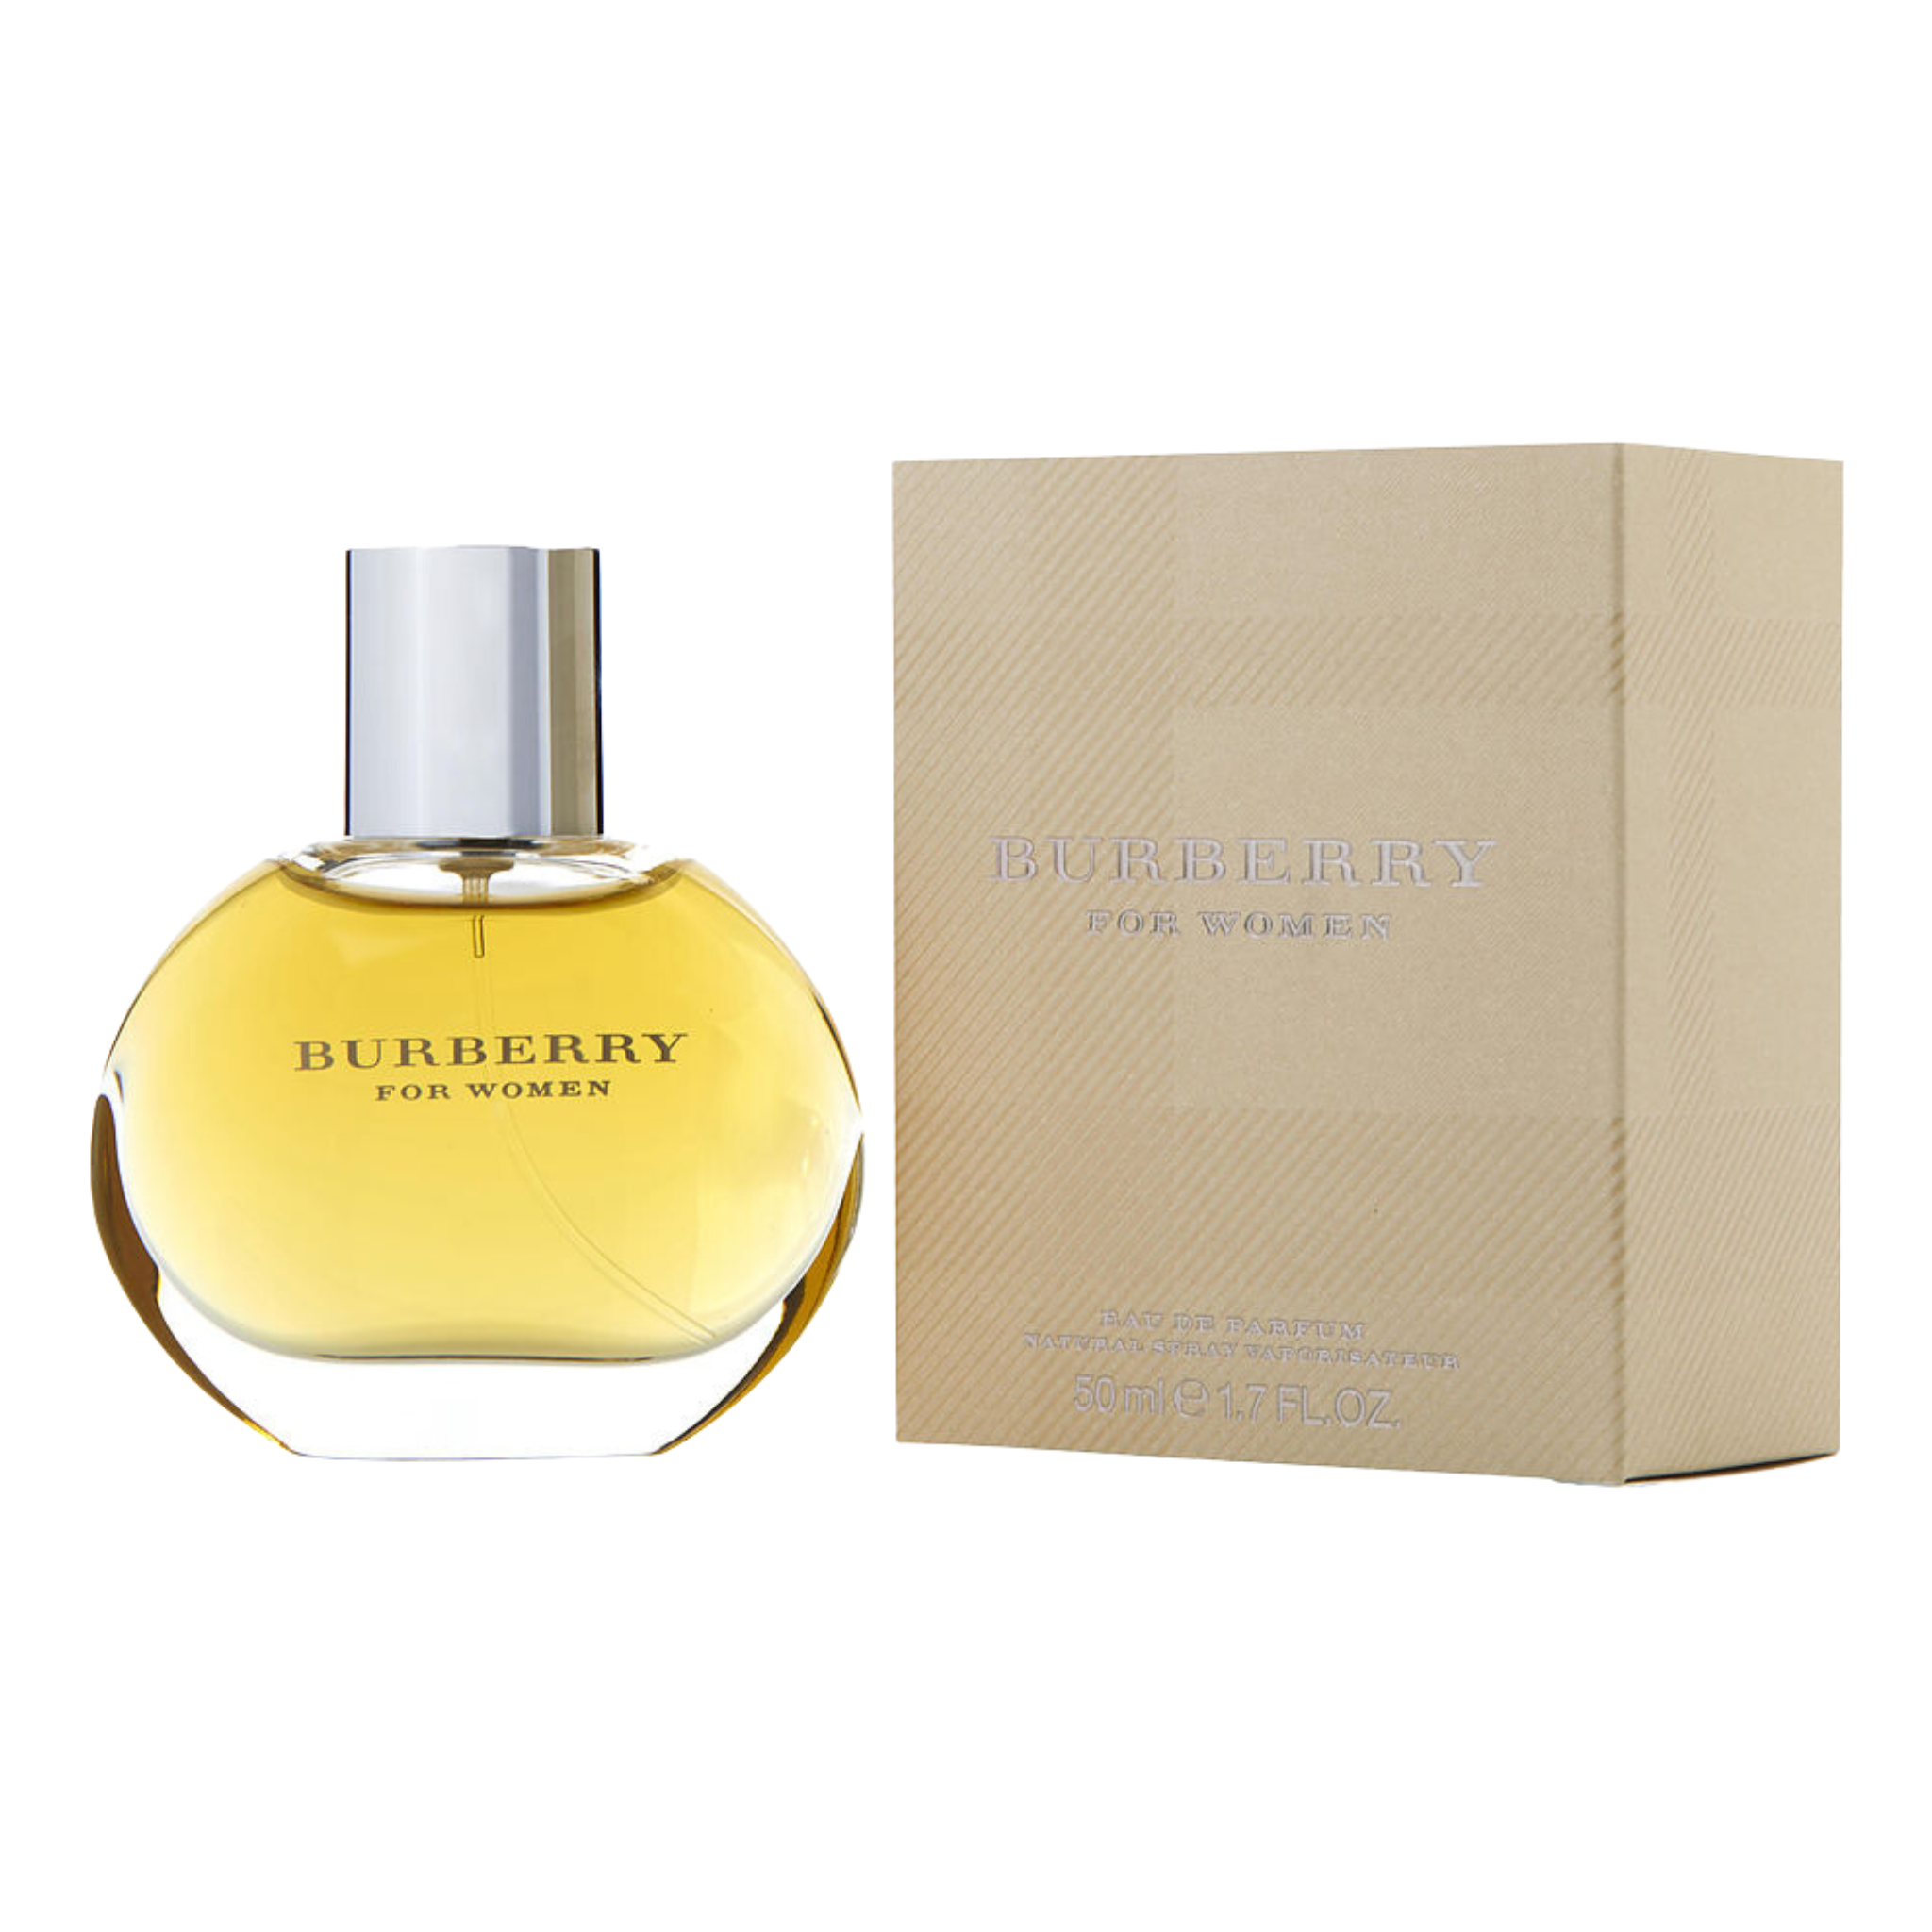 Burberry Eau De Parfum for Women